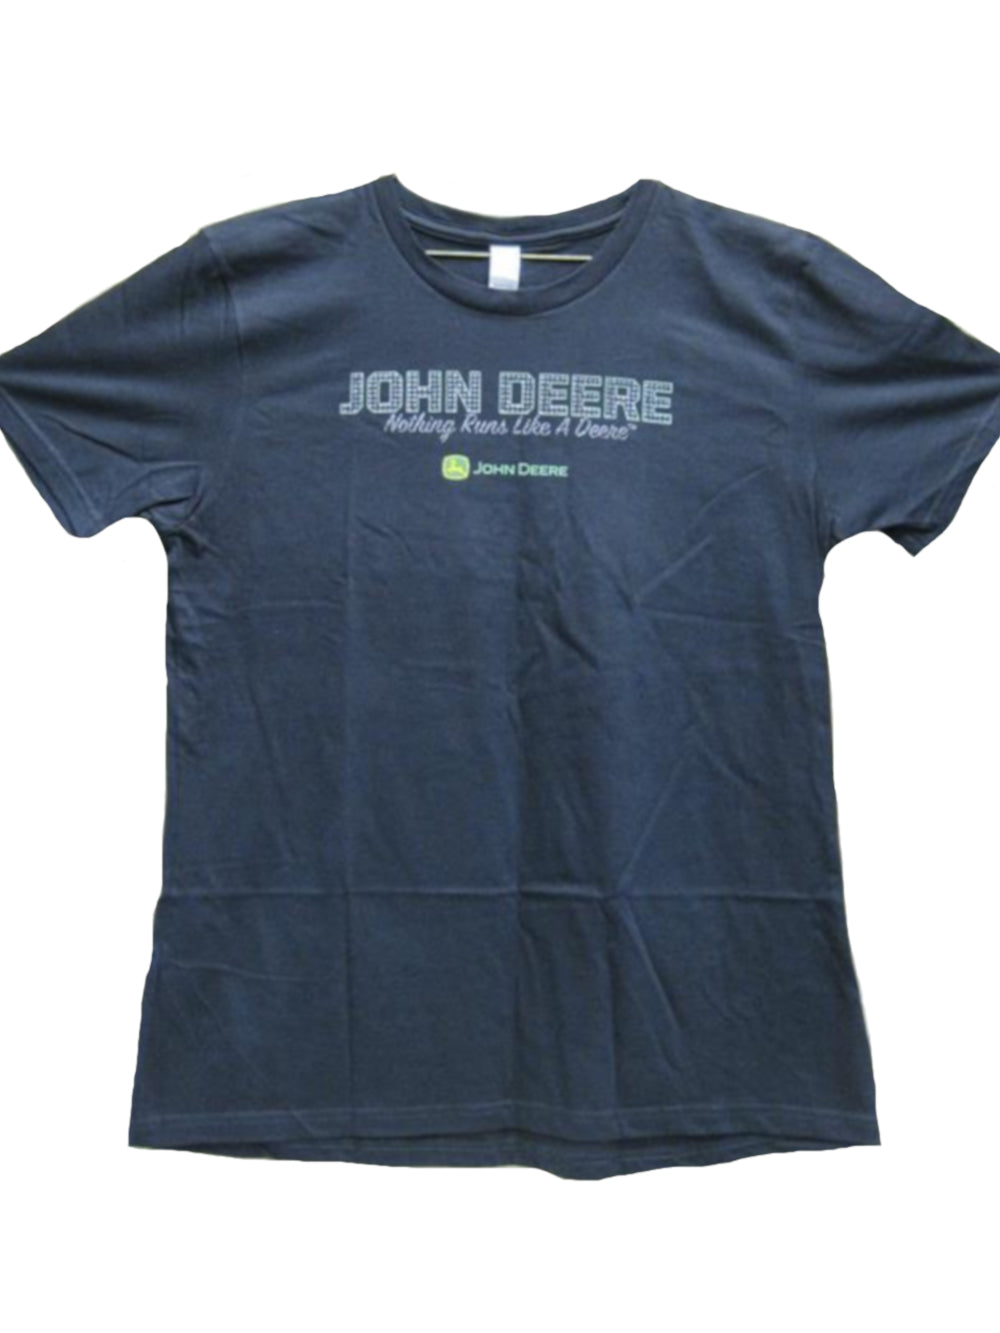 Ladies John Deere Black "Jeweled" Graphic T-shirt *NWT* (SMALL) - LP43170